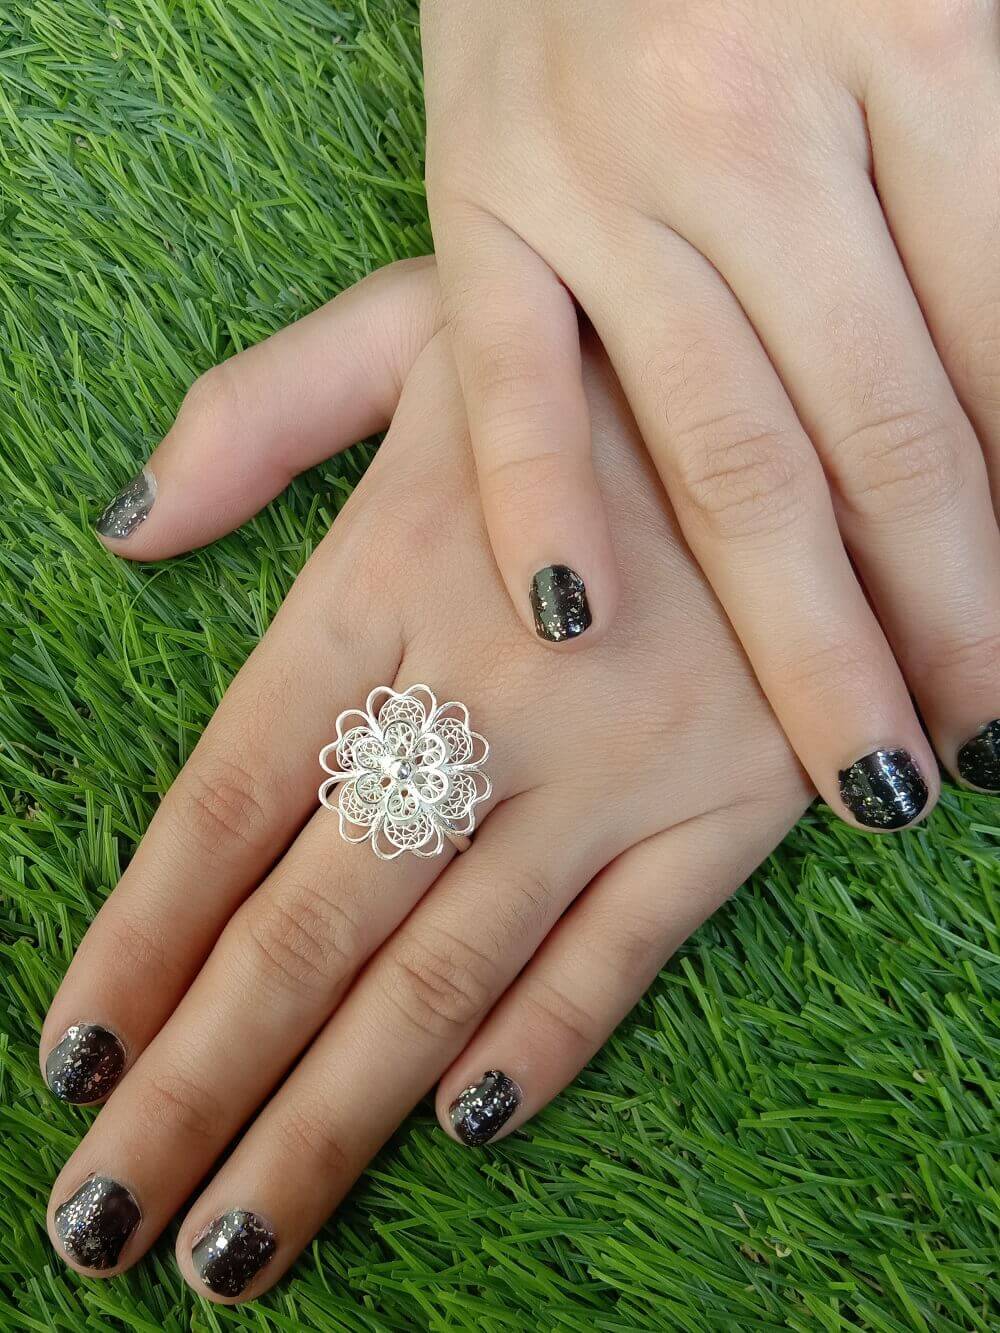 Cheap cute Sparkling rhinestone silver wide rings for women